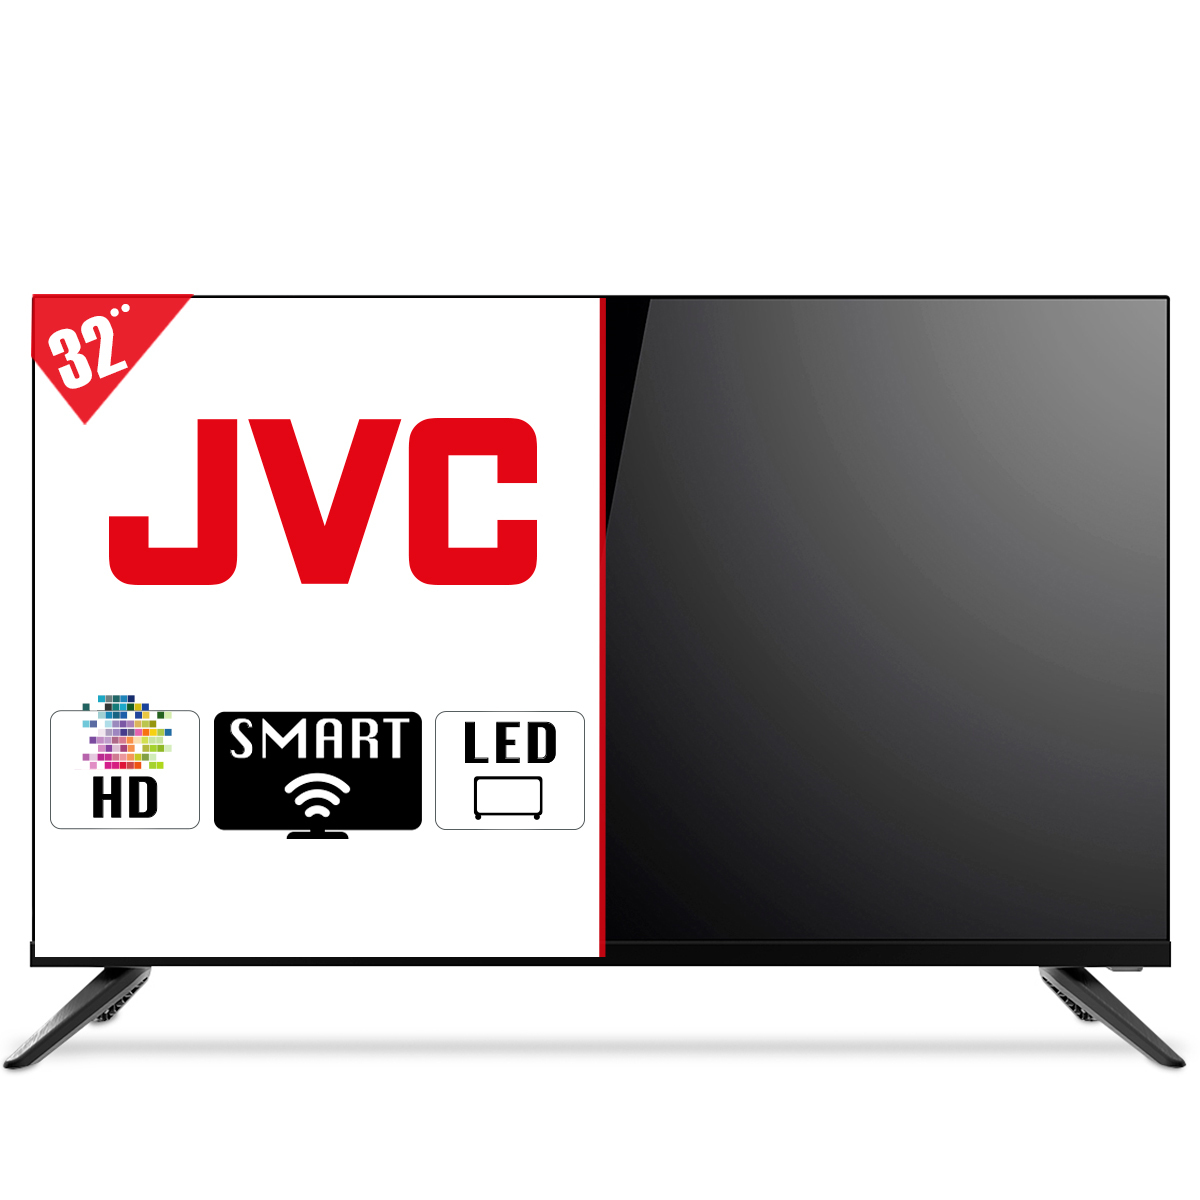 Pantalla JVC Smart SI32URF Roku TV 32 pulg. Led HD